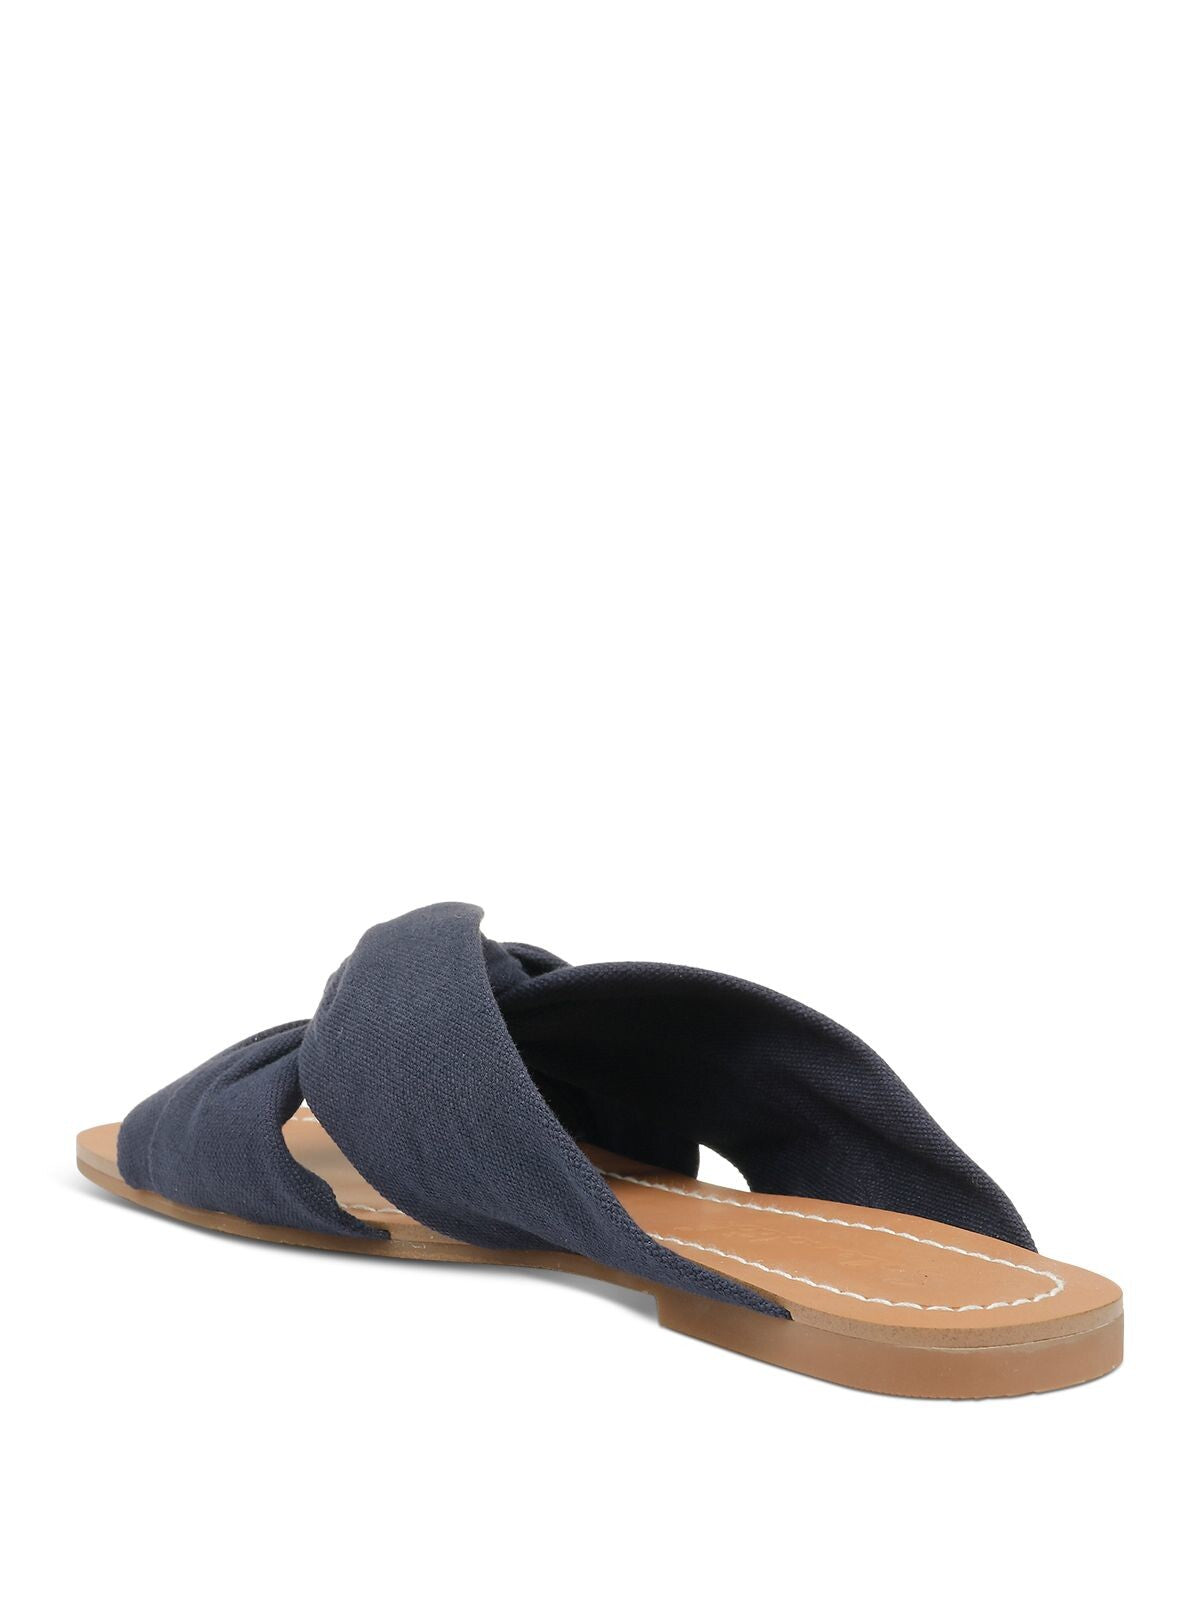 SPLENDID Womens Navy Twist Detail Alannis Square Toe Slip On Slide Sandals Shoes 8.5 M